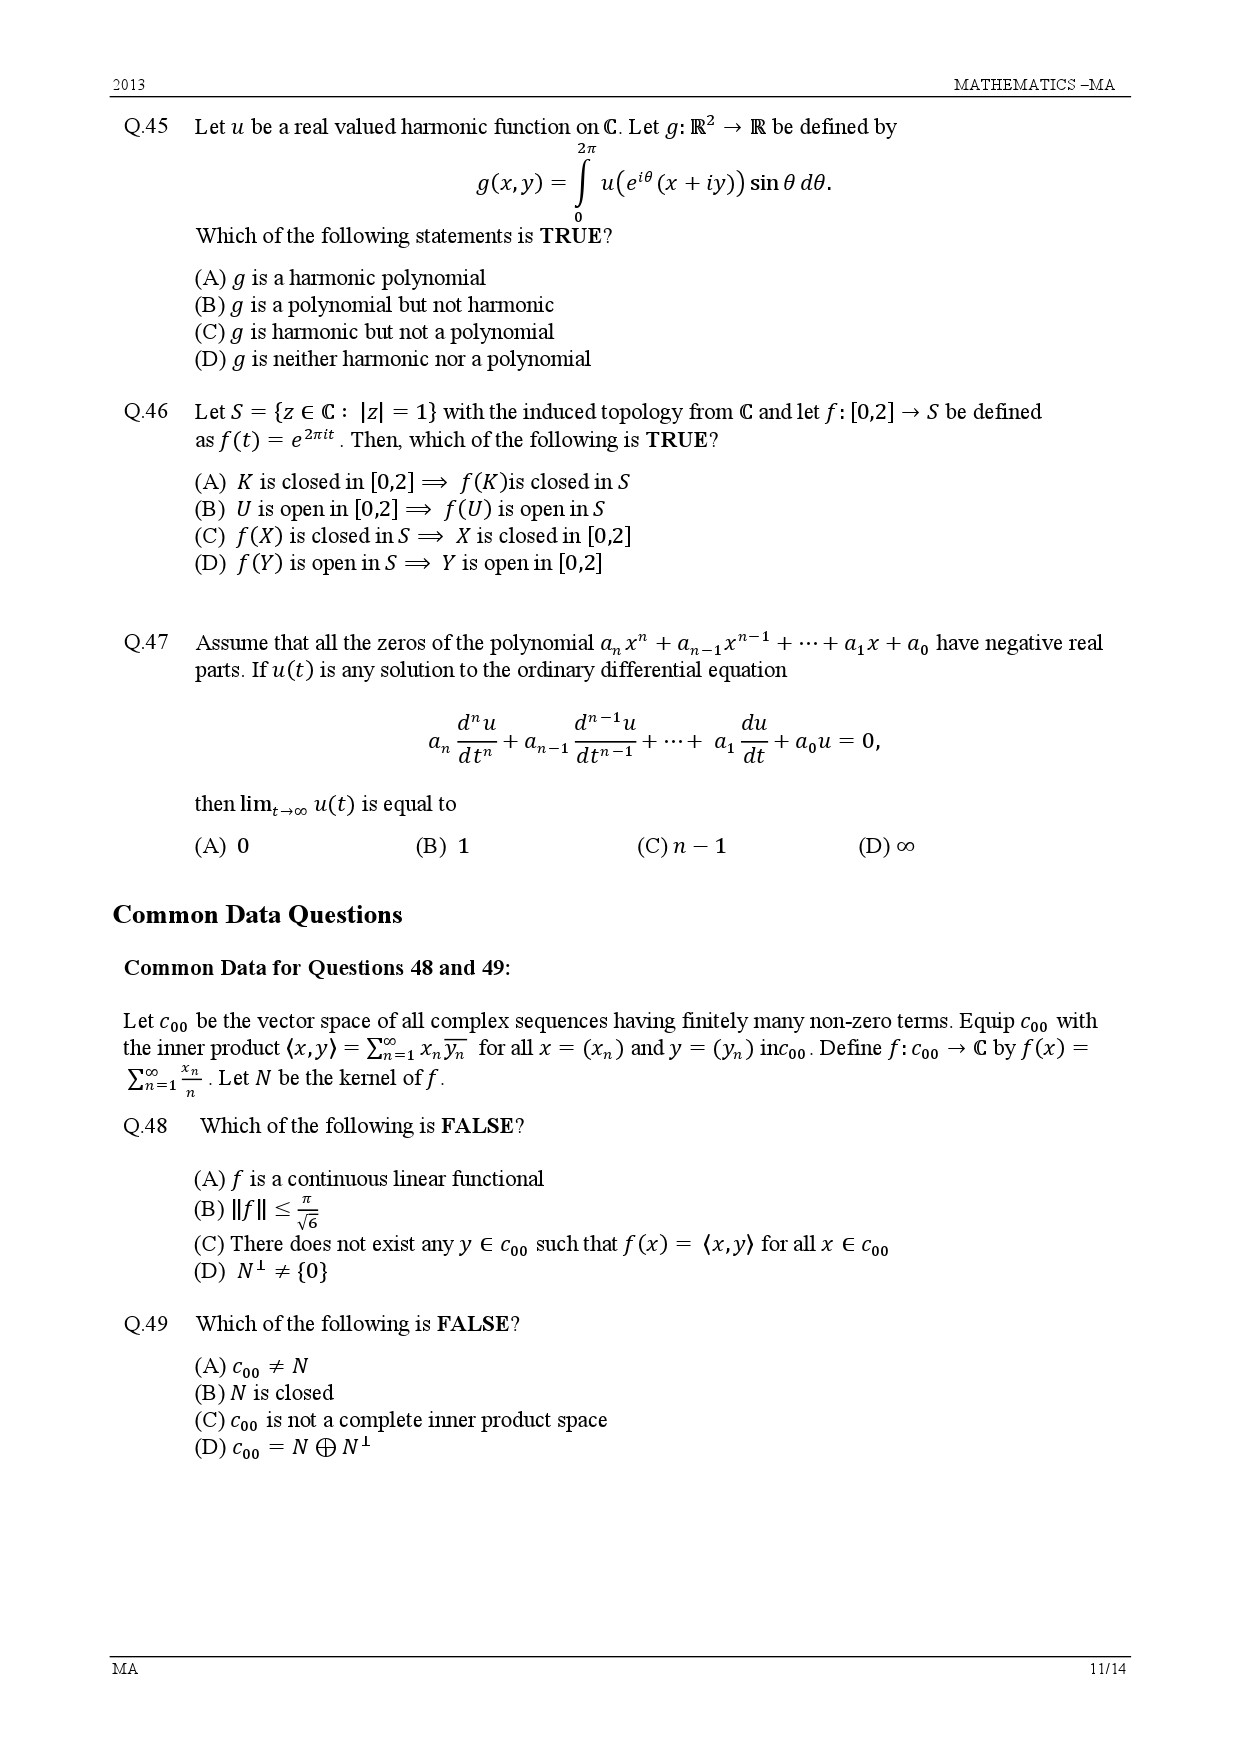 GATE Exam Question Paper 2013 Mathematics 11